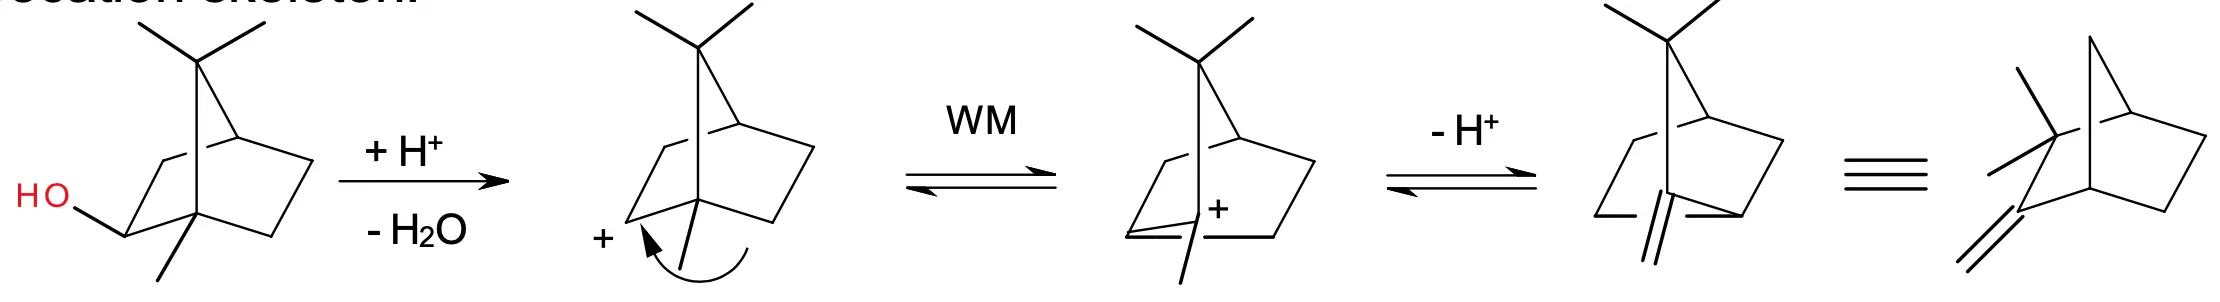 Wagner-Meerwei rearrangement of borneol into camphene - general reaction scheme